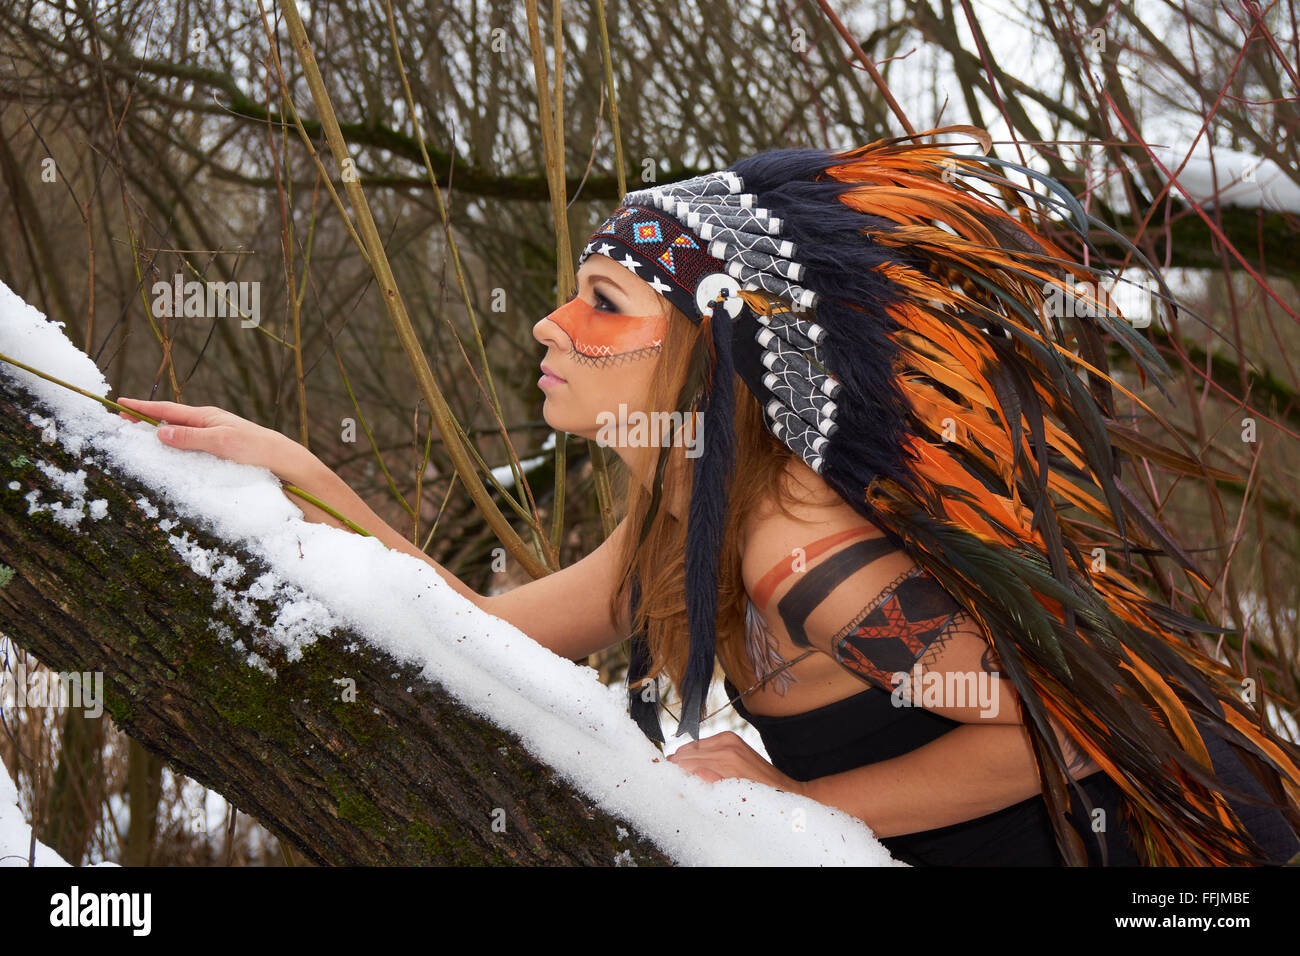 Girl in native american headdress climbs tree Stock Photo